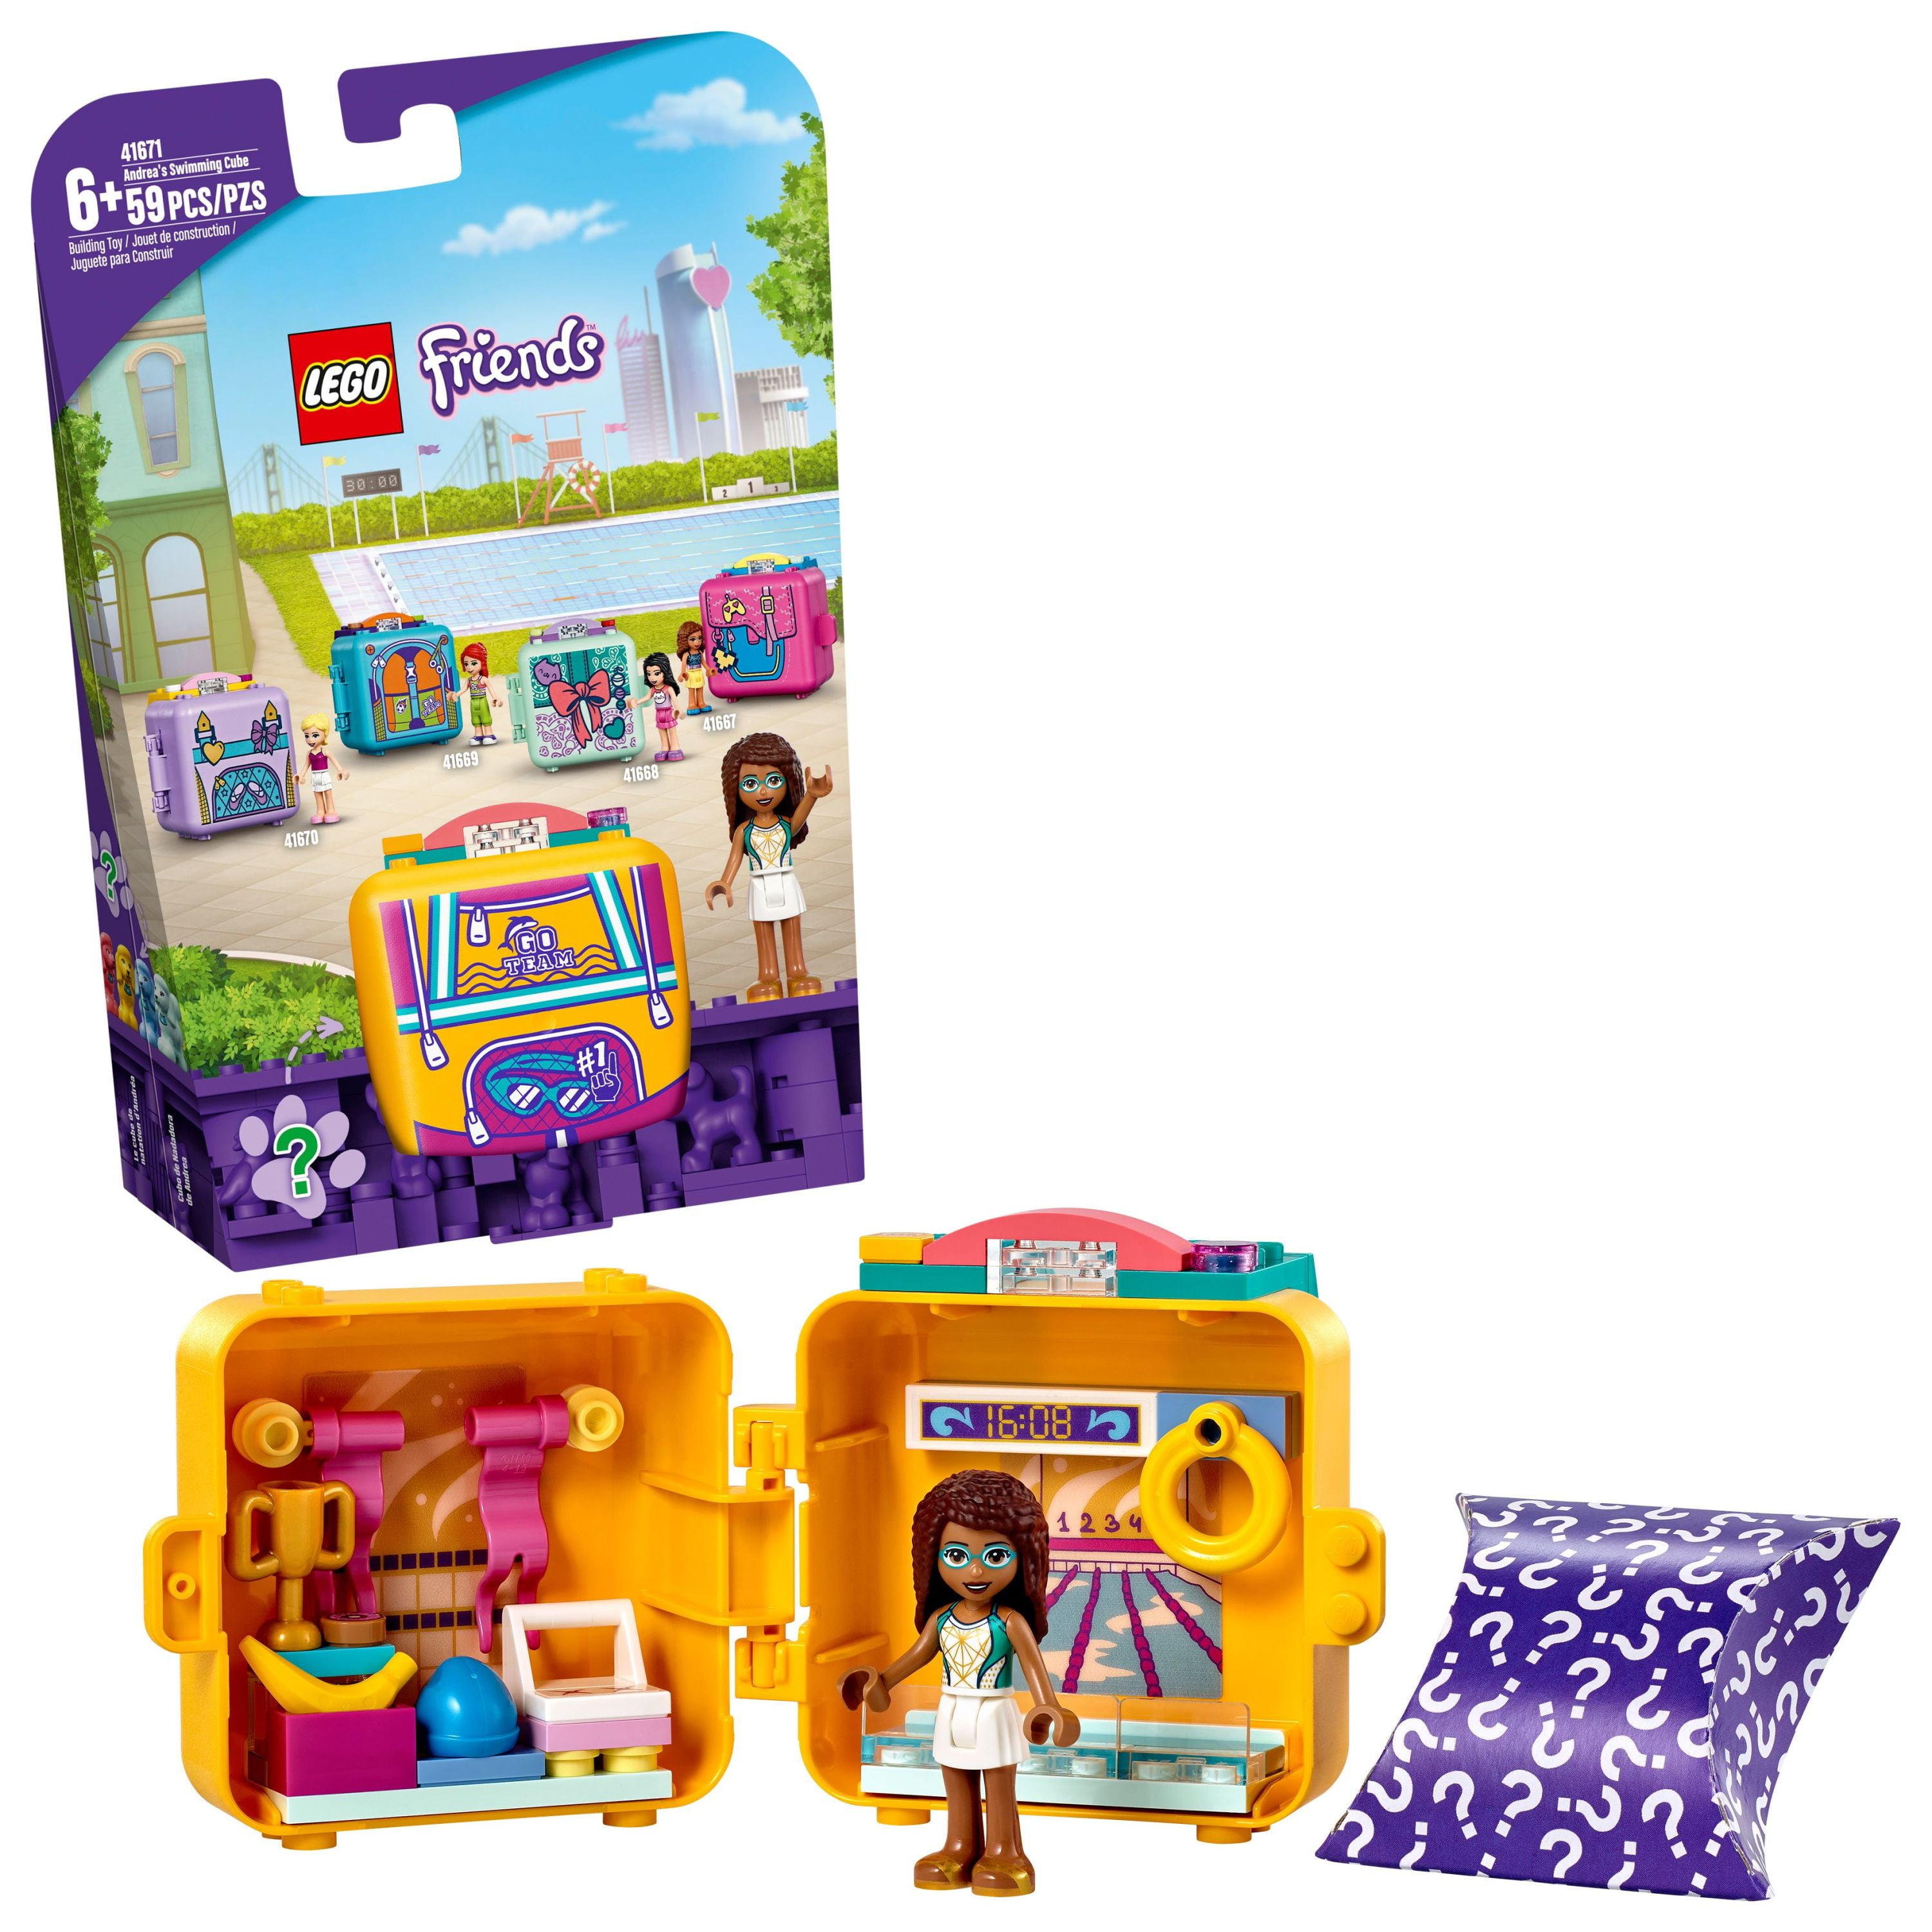 Lego Disney Princess 41150 Moana's Ocean Voyage 307 Pieces Set for sale online